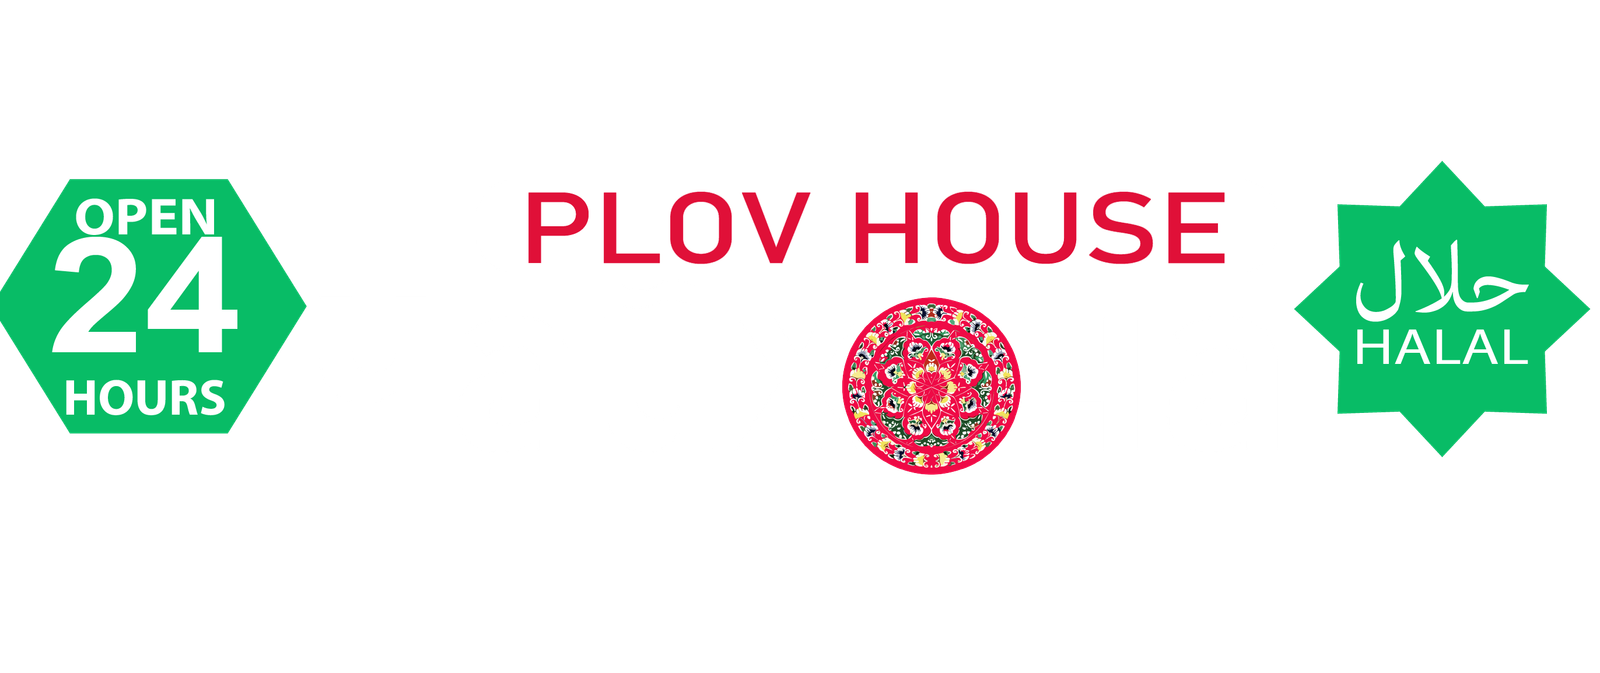 Plov House